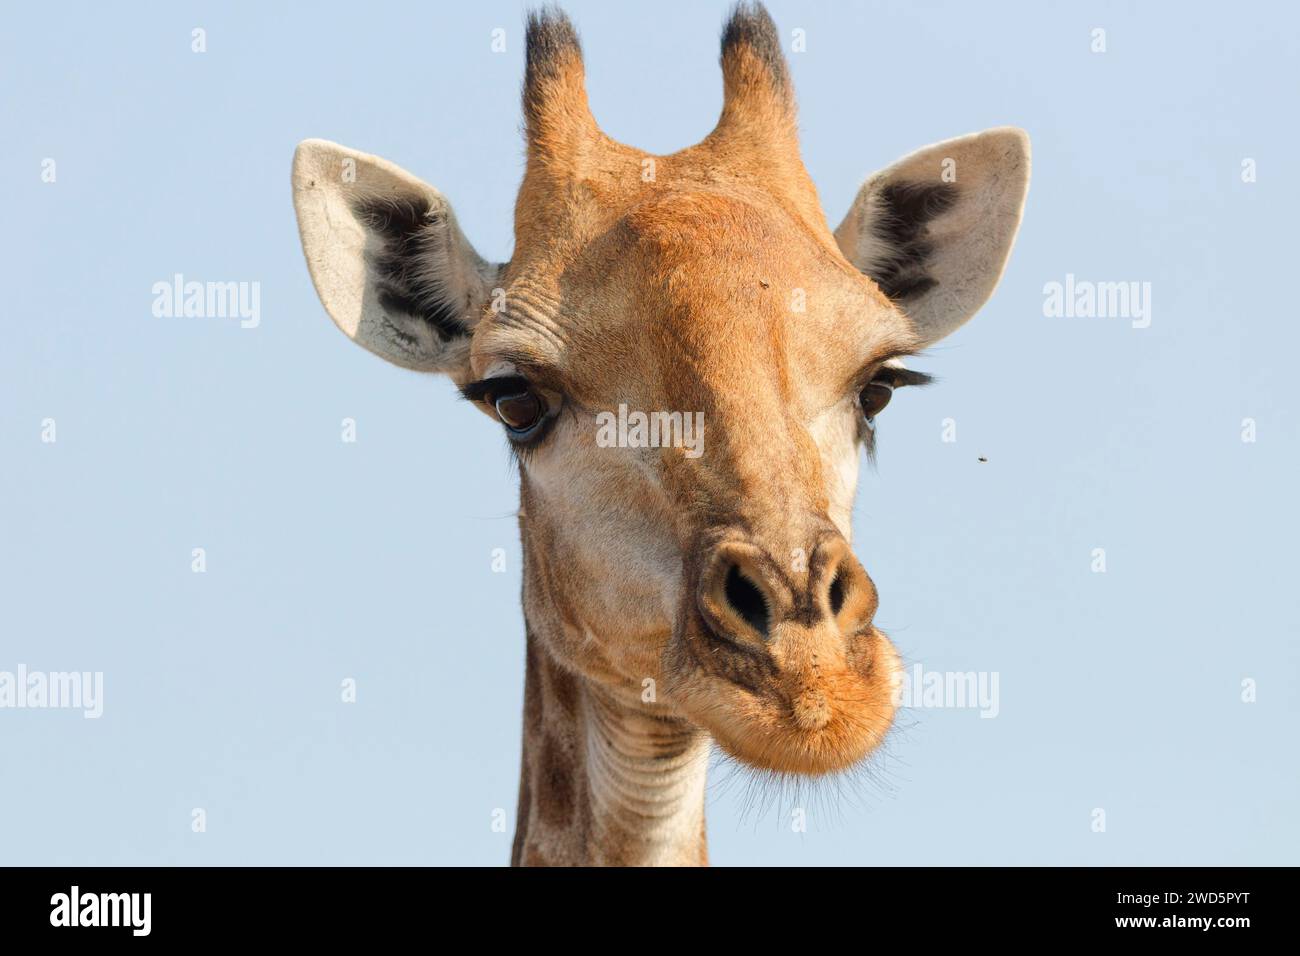 Südafrikanische Giraffe (Giraffa camelopardalis giraffa), Erwachsene, Tierporträt, Kopf-Nahaufnahme, Kruger-Nationalpark, Südafrika, Afrika Stockfoto